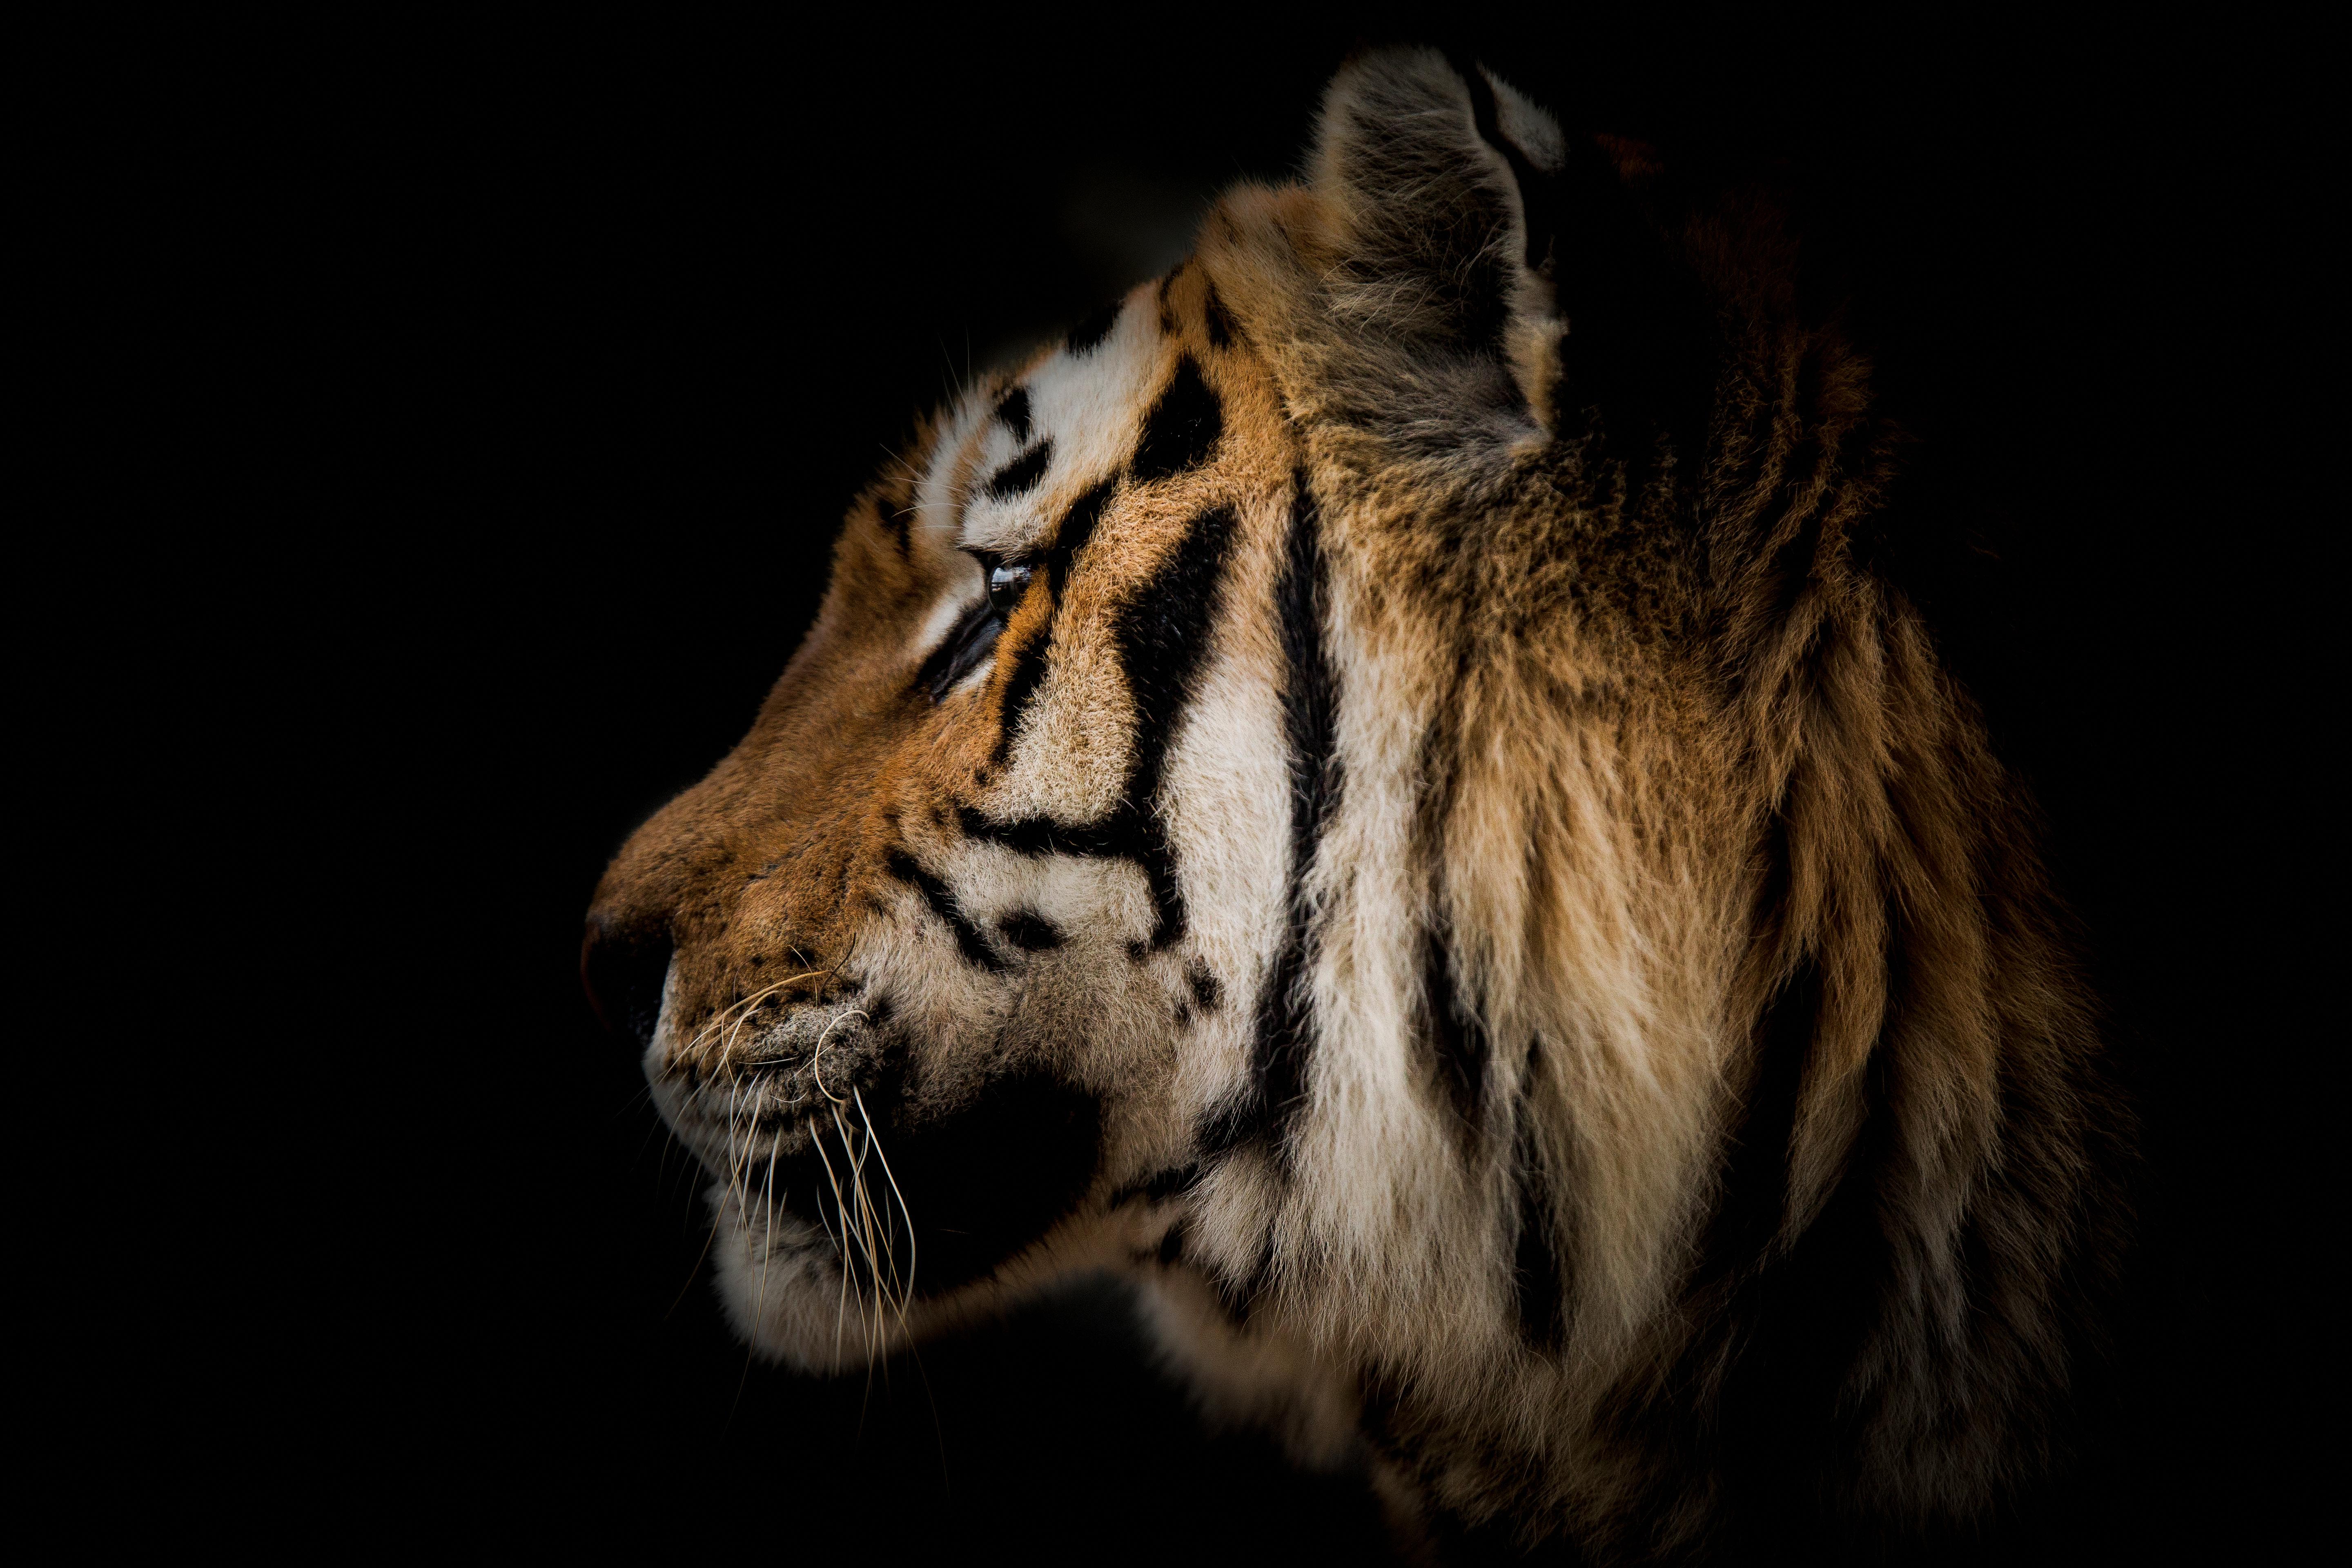 Shane Russeck Animal Print - Tiger Photograph "Tiger Portrait" - 60x40 Photography Wildlife Art Unsigned 